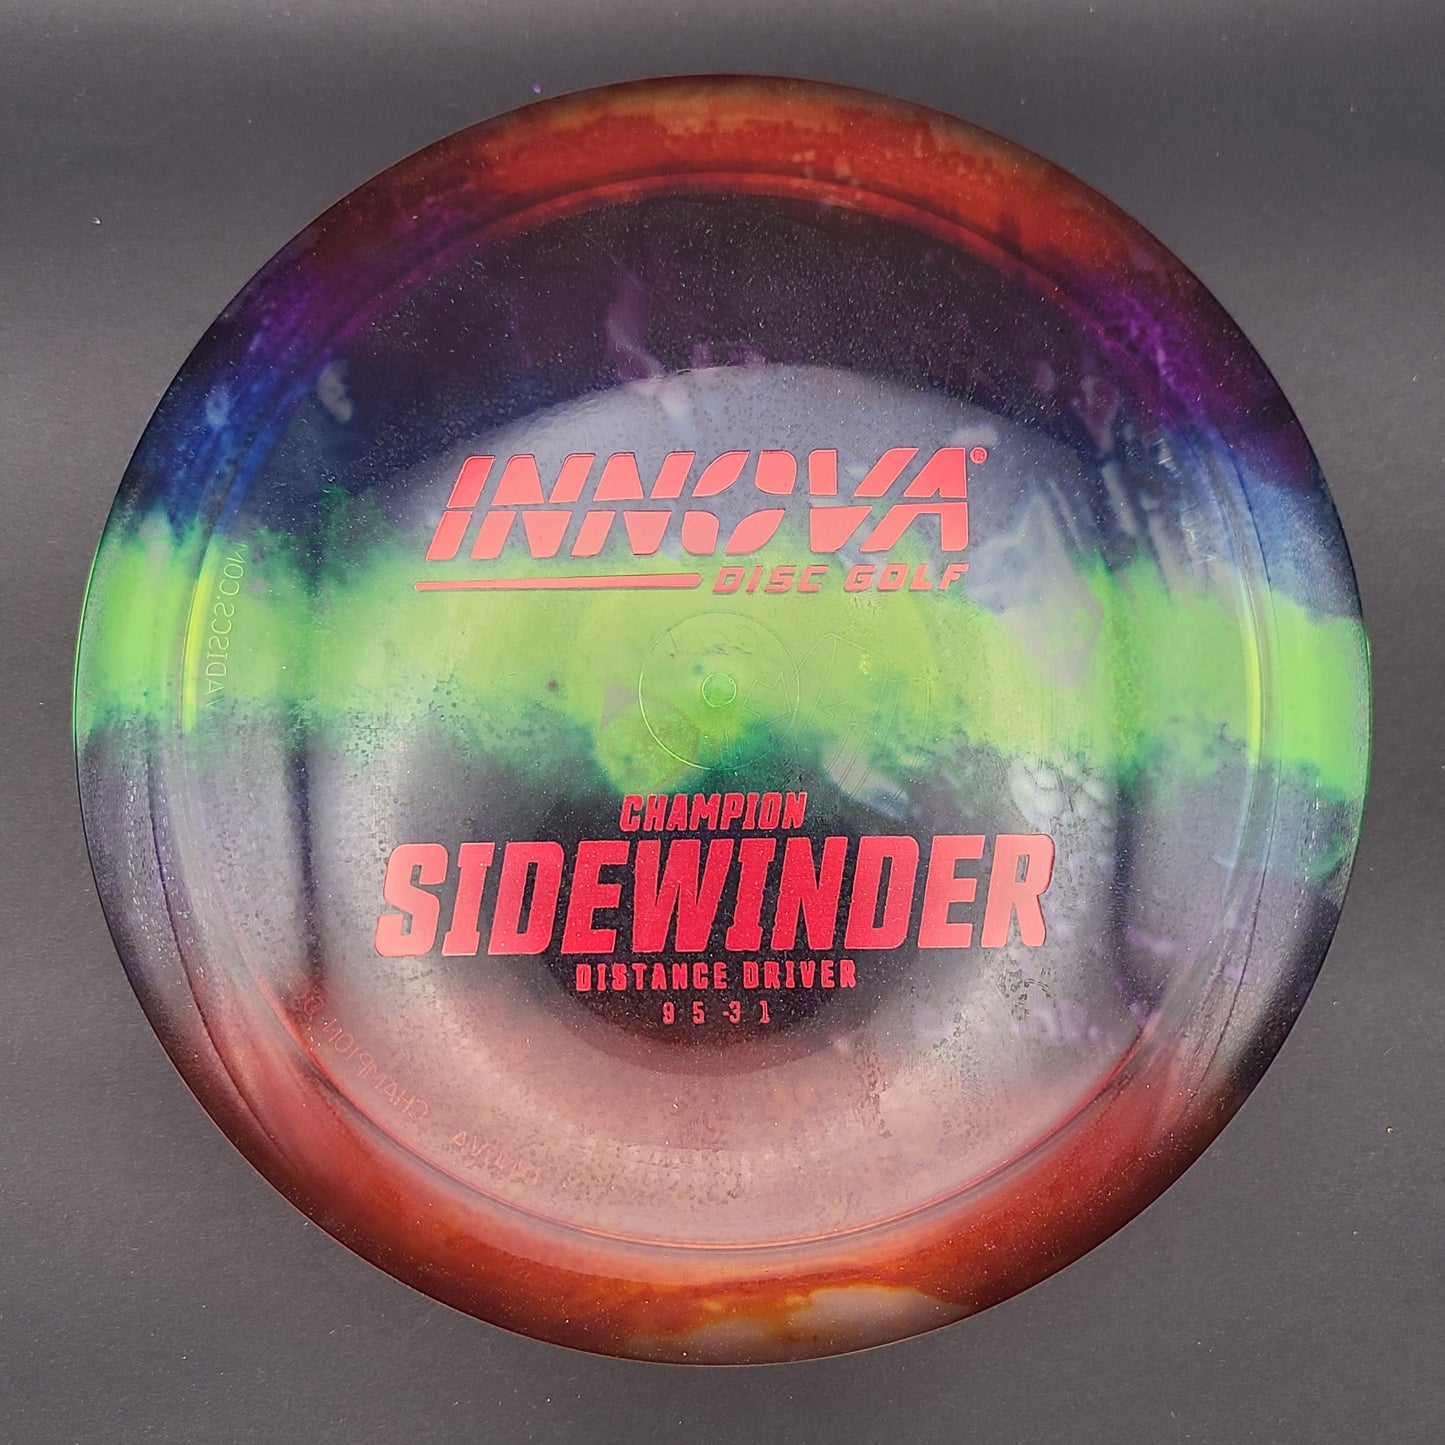 Innova - Sidewinder - I-Dye Champion